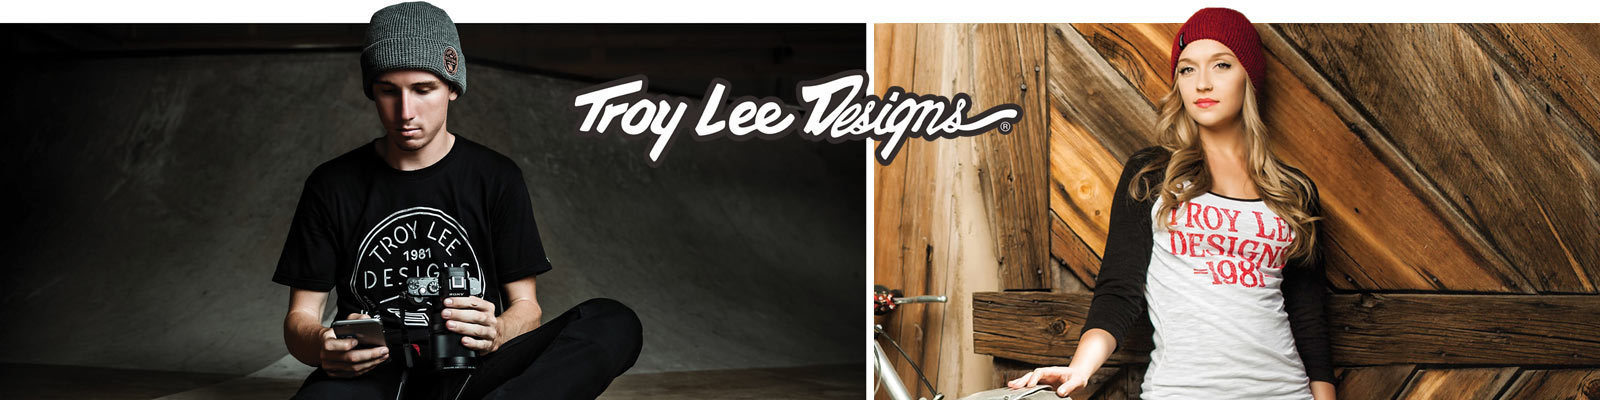 Troy-Lee-Designs-Freizeitbekleidung